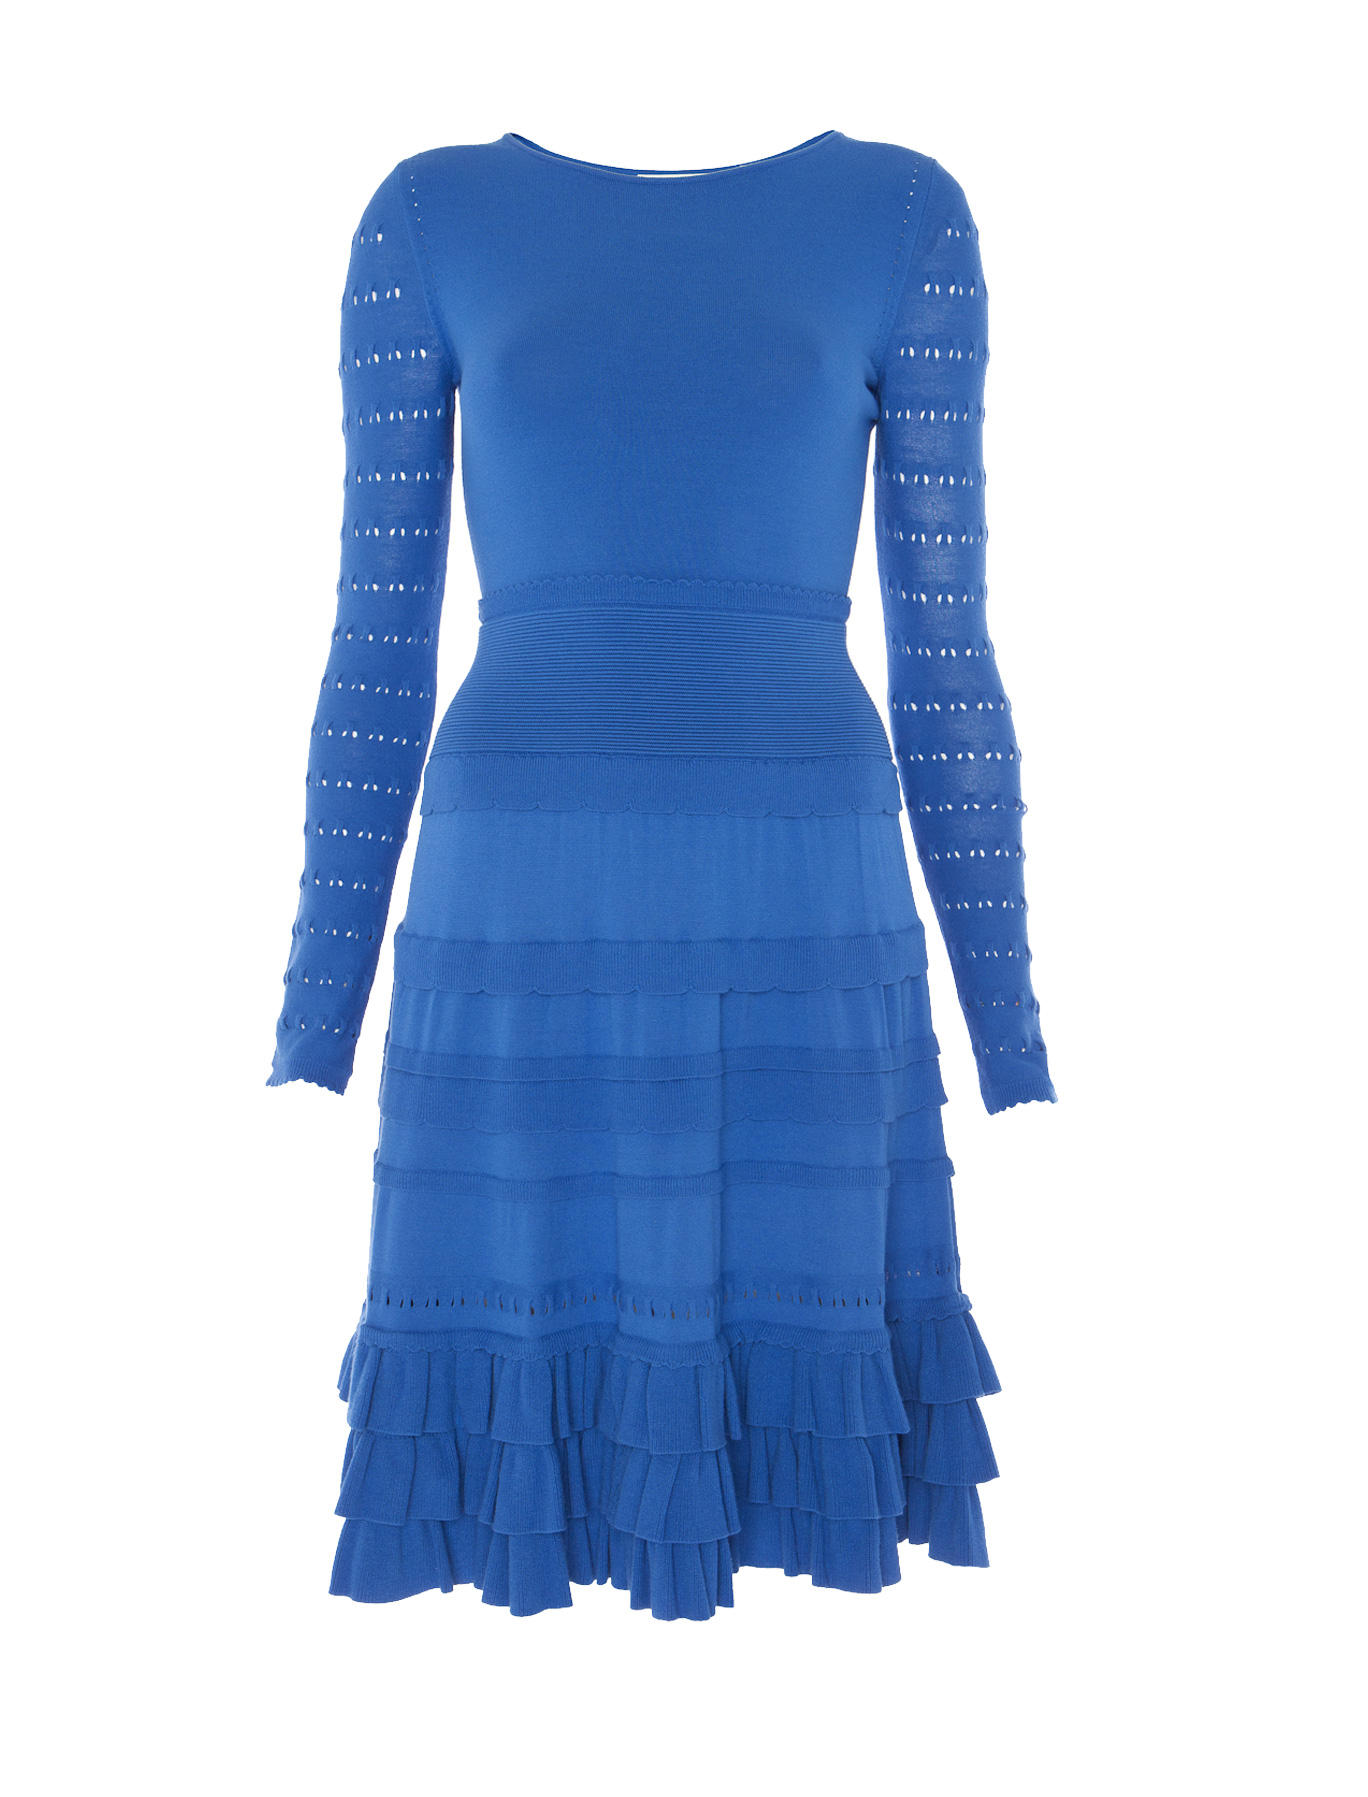 Temperley London Canterbury Knit Frill Dress in Blue | Lyst